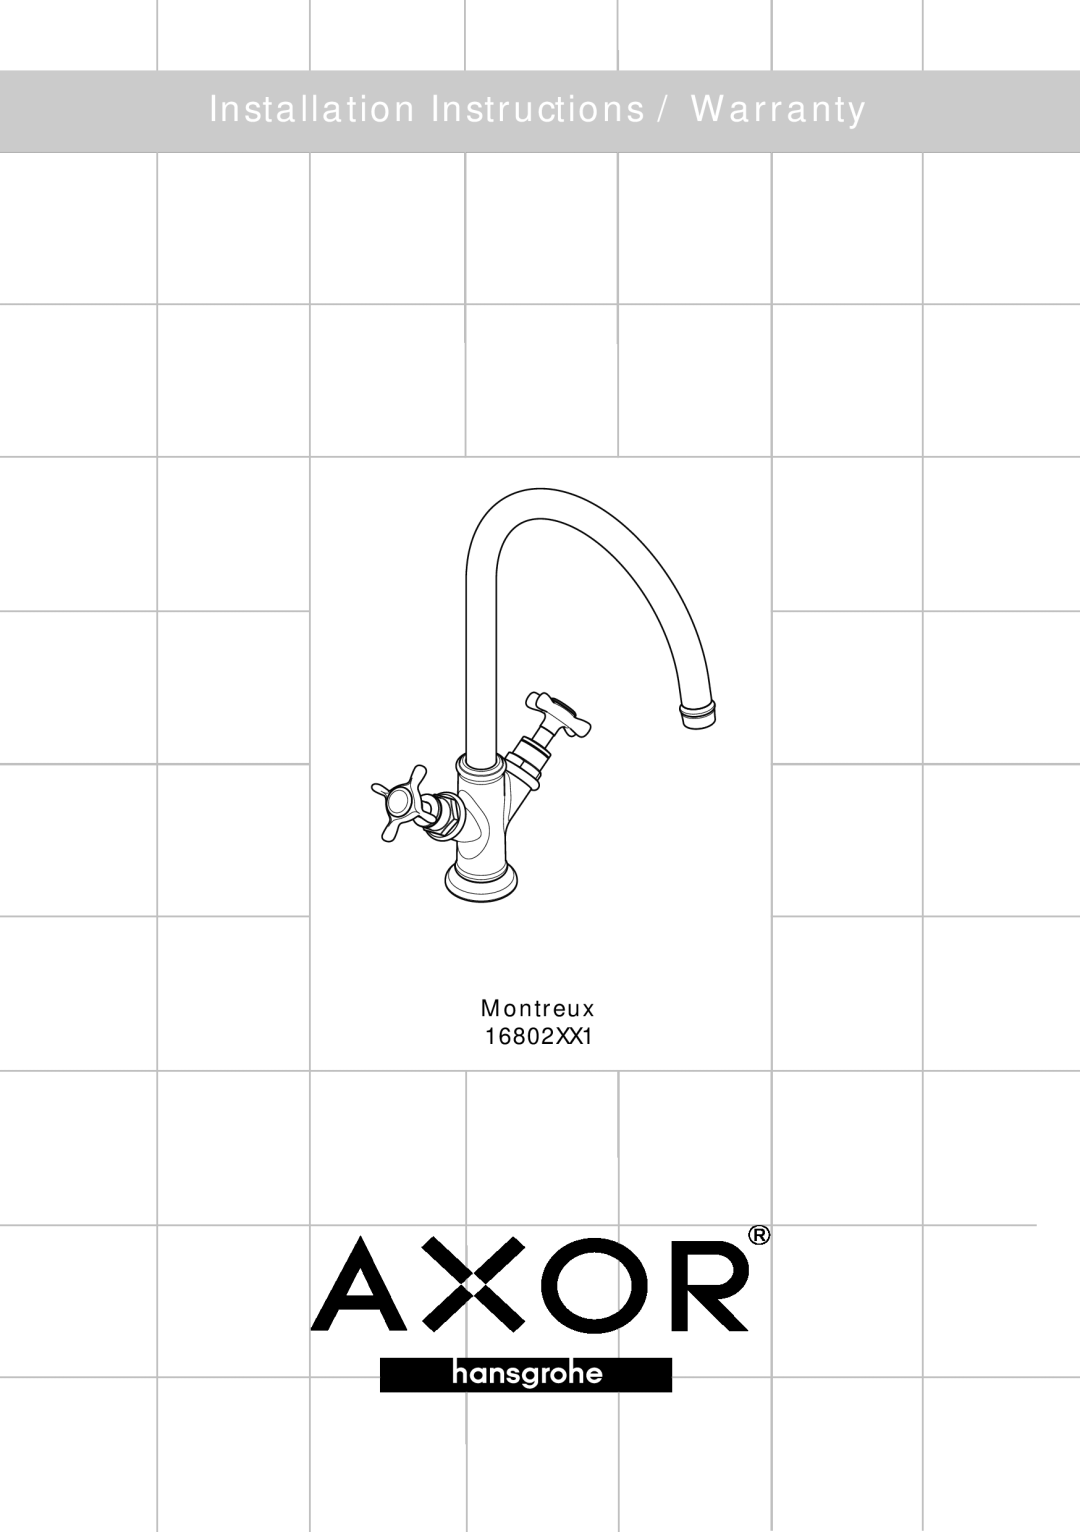 Axor 97997001, 98616XXX, 97987000, 13961000 installation instructions Installation Instructions / Warranty, Montreux 